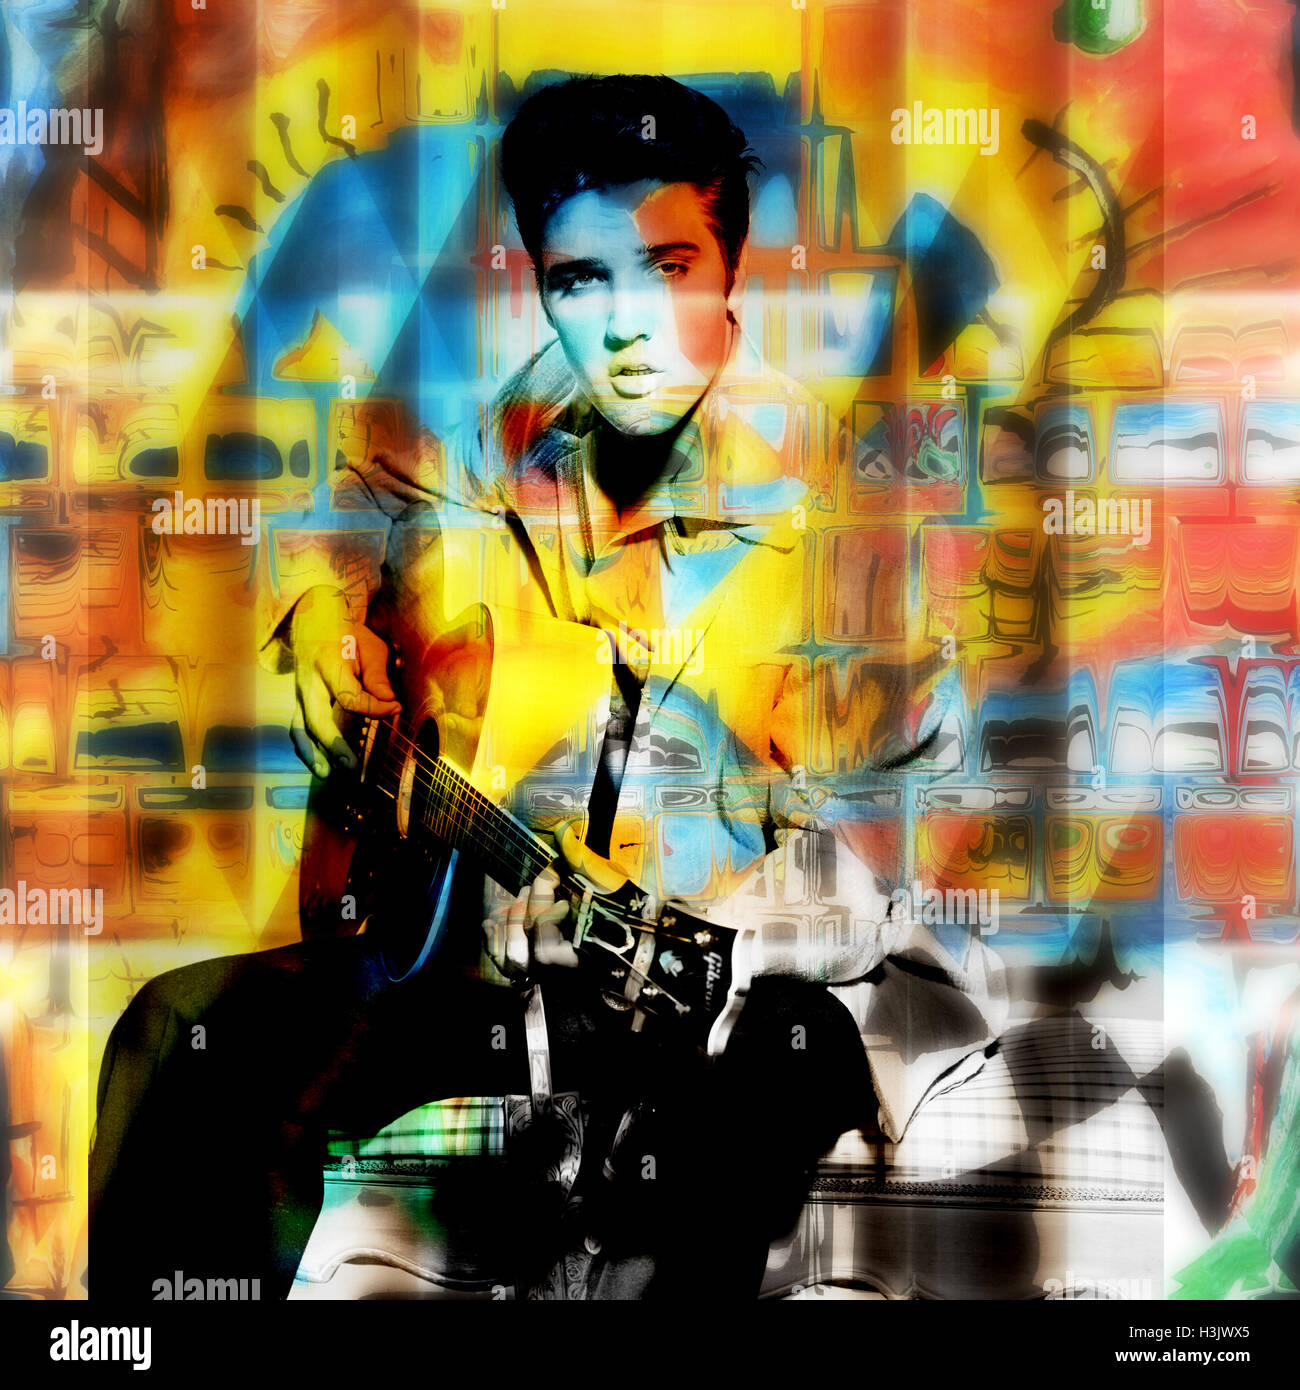 Elvis Presley in pop art colors Stock Photo - Alamy